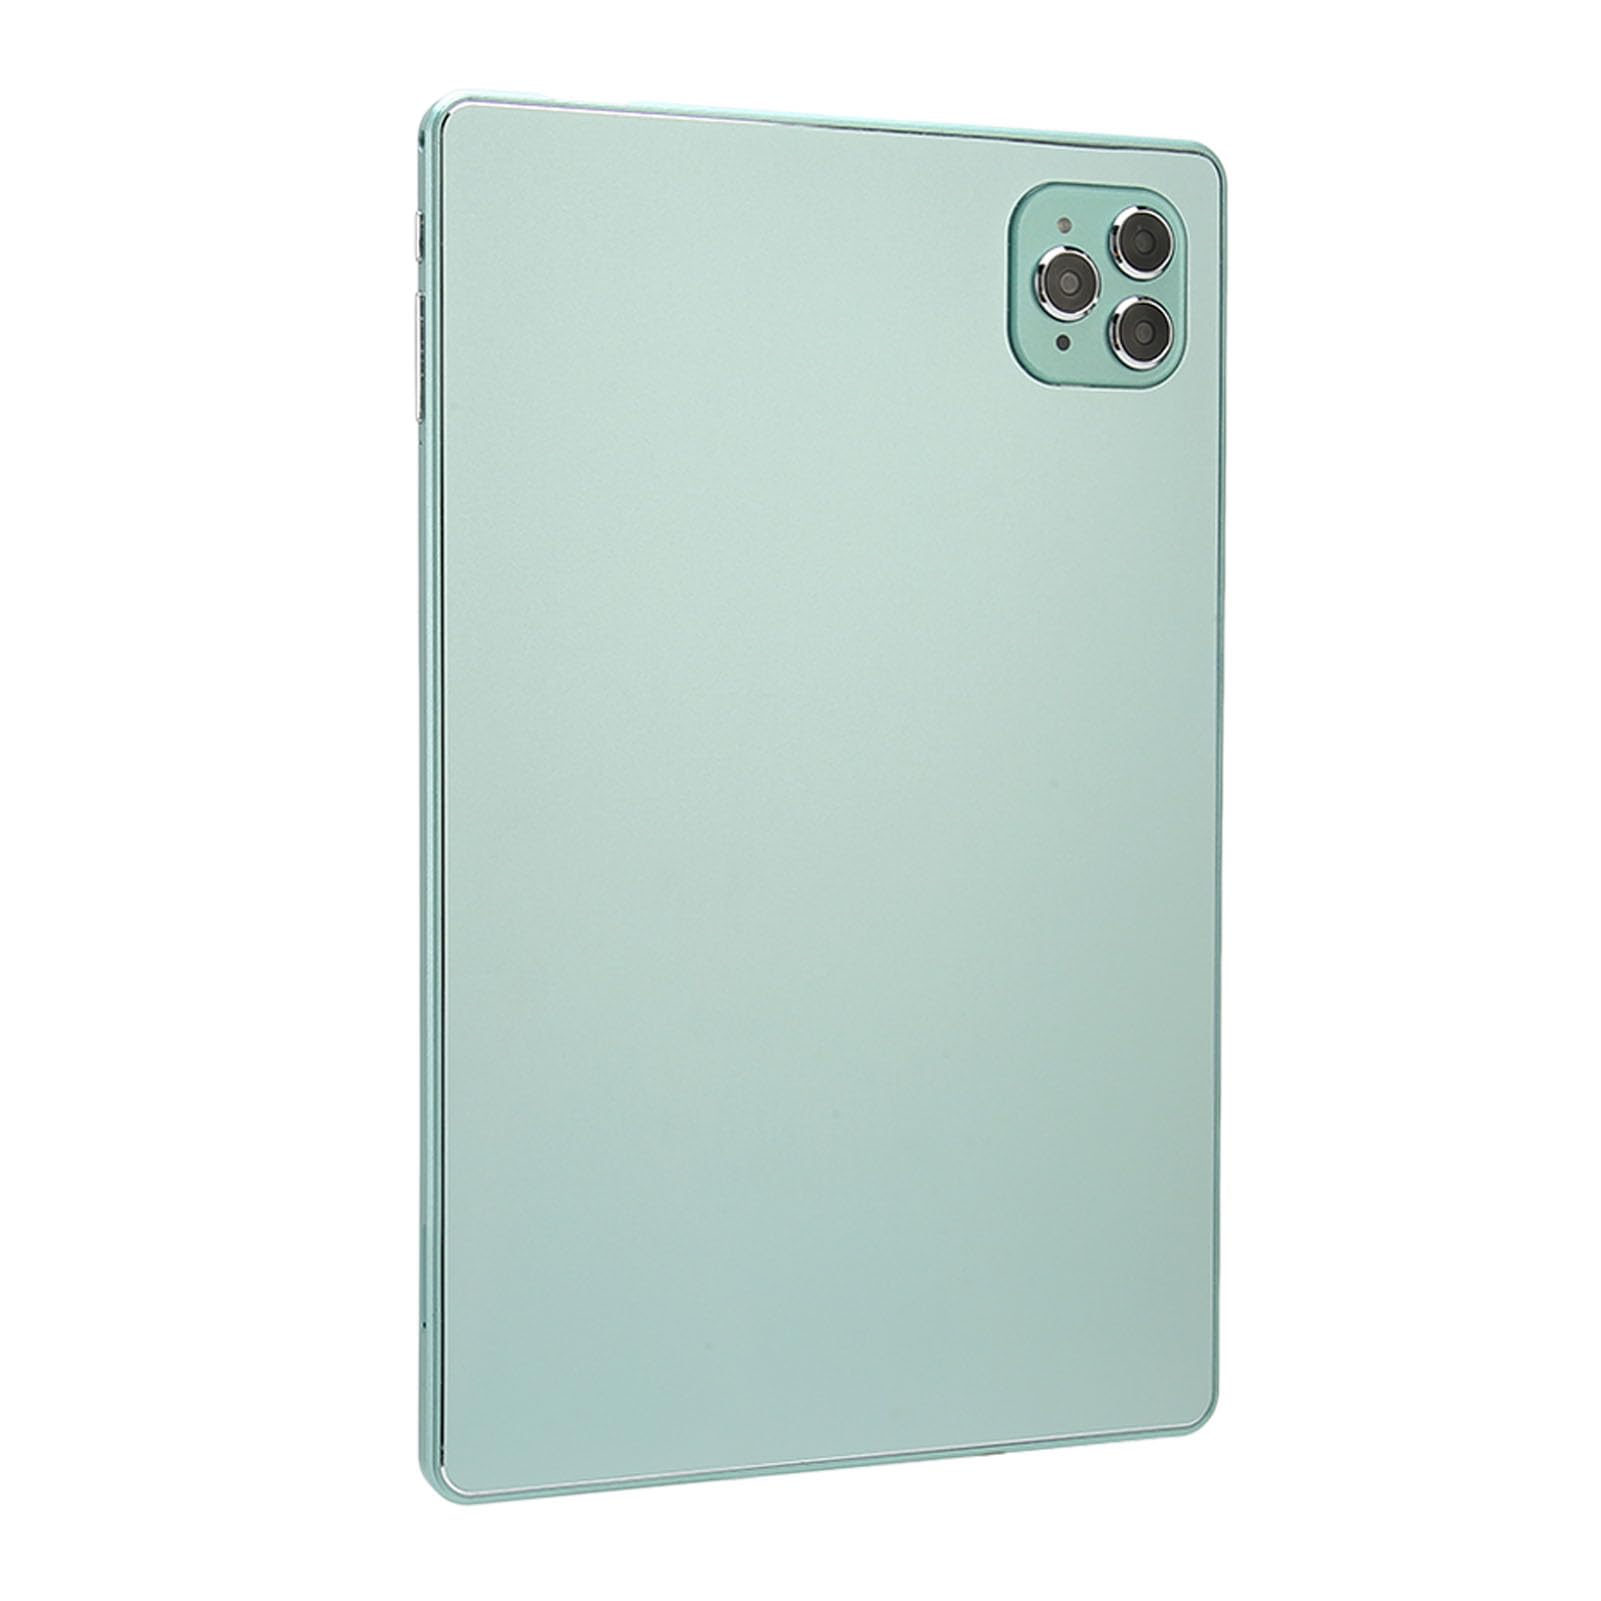 Airshi Office Tablet, Dual Camera 2 Card Slots HD Tablet US Plug 100-240V for Home (Green)